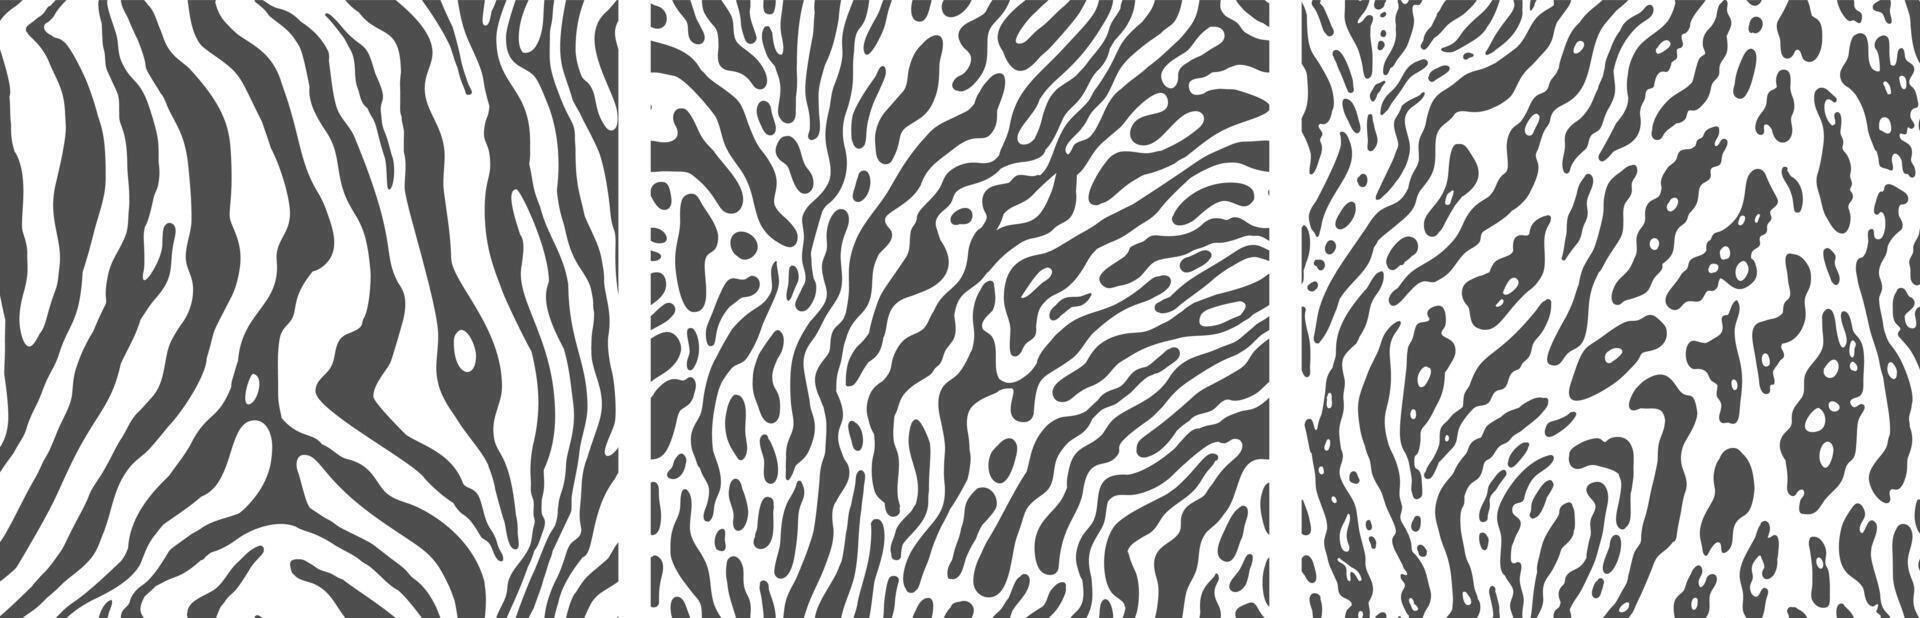 Set of monochrome zebra print backgrounds. vector